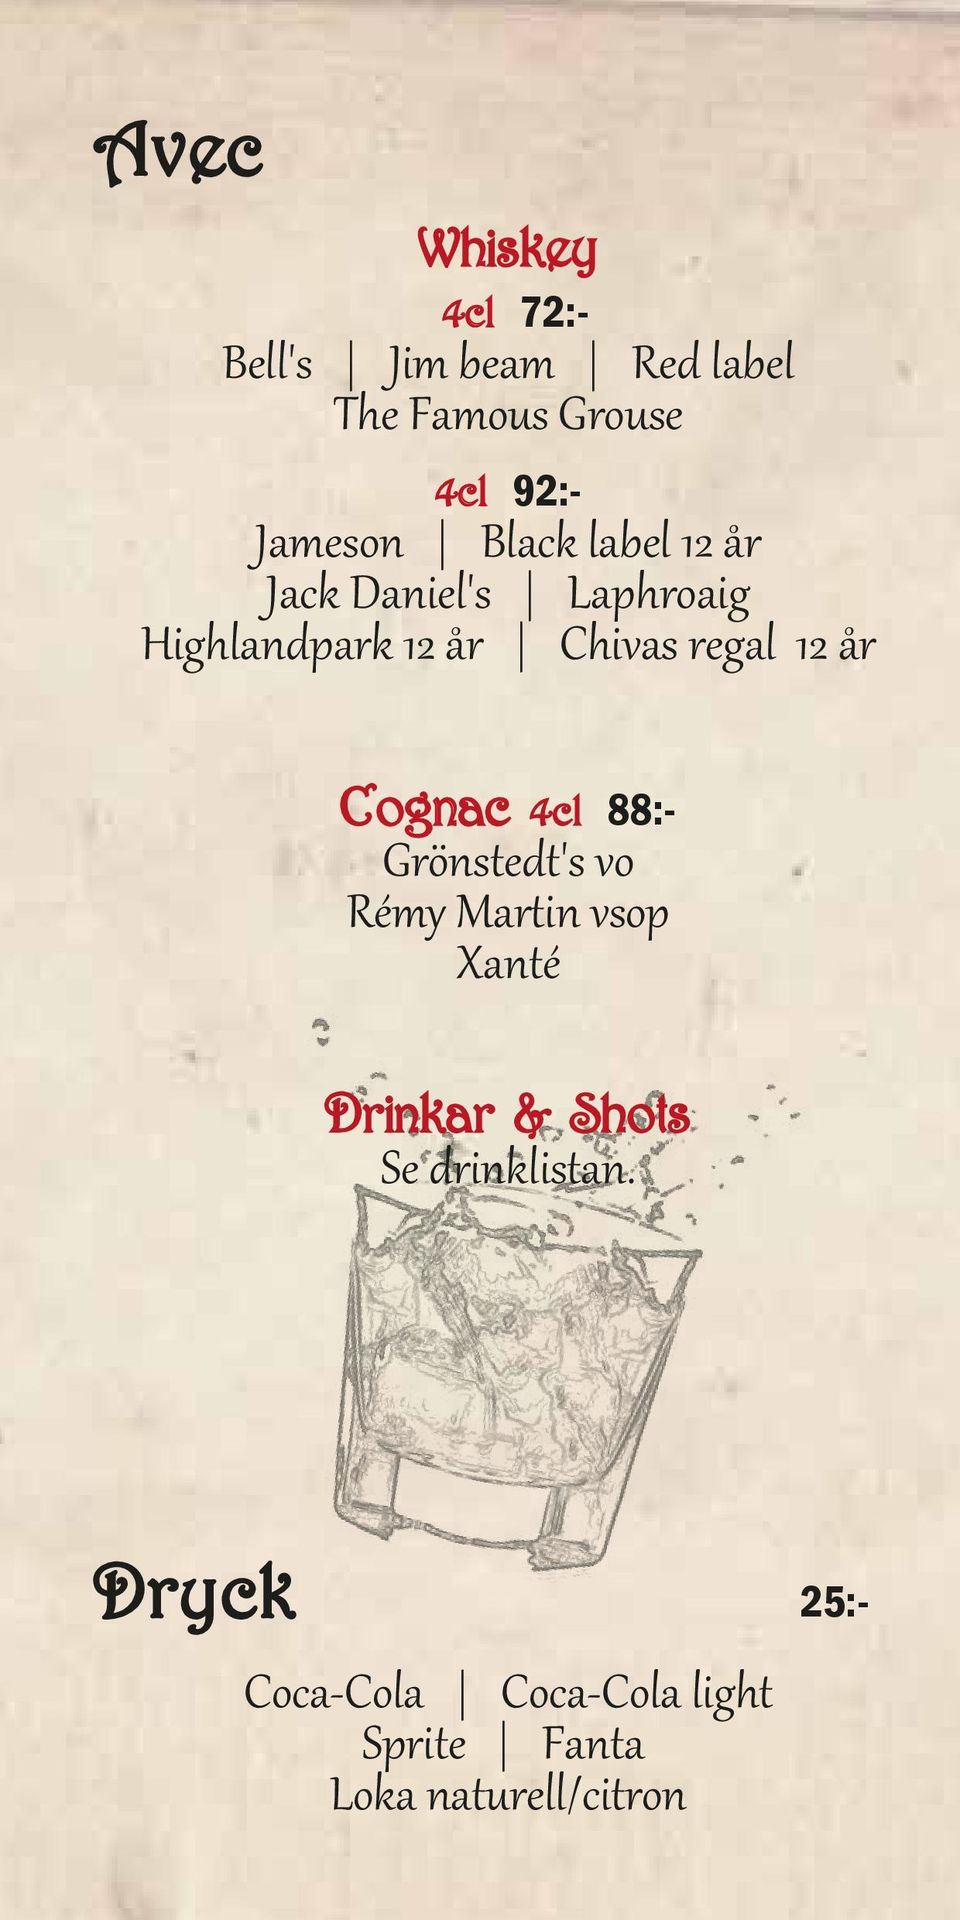 regal 12 år Cognac 4cl 88:- Grönstedt's vo Rémy Martin vsop Xanté Drinkar &